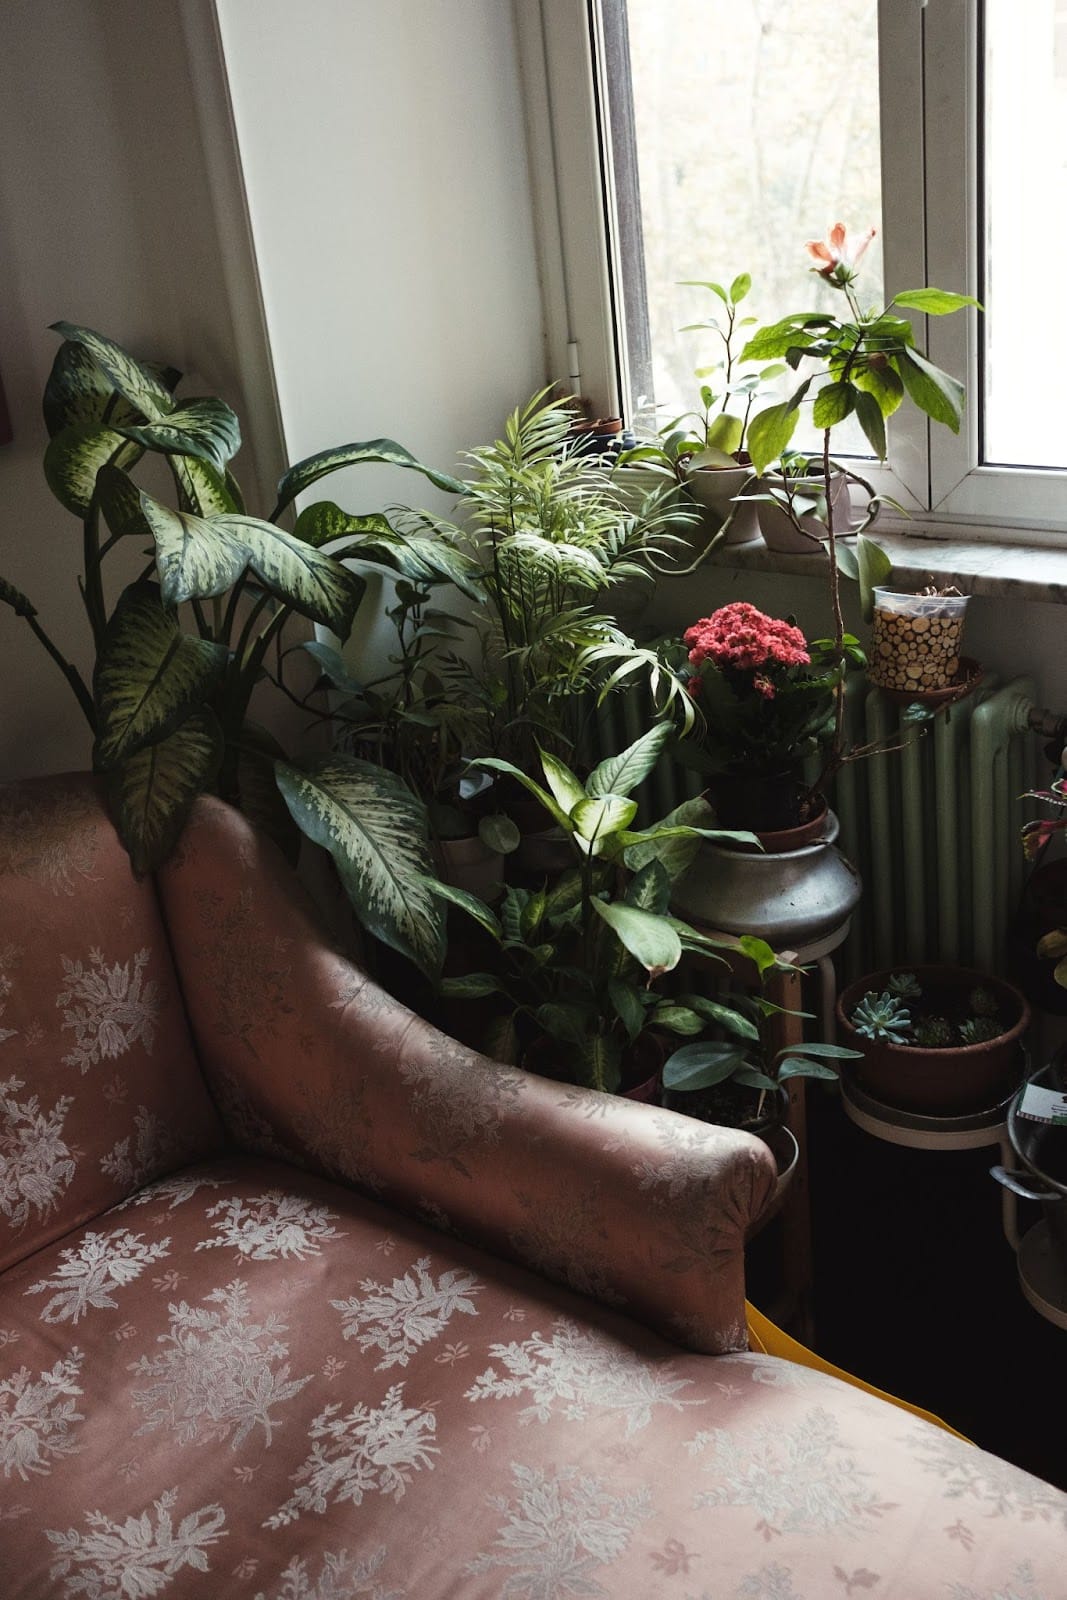 house plants by window